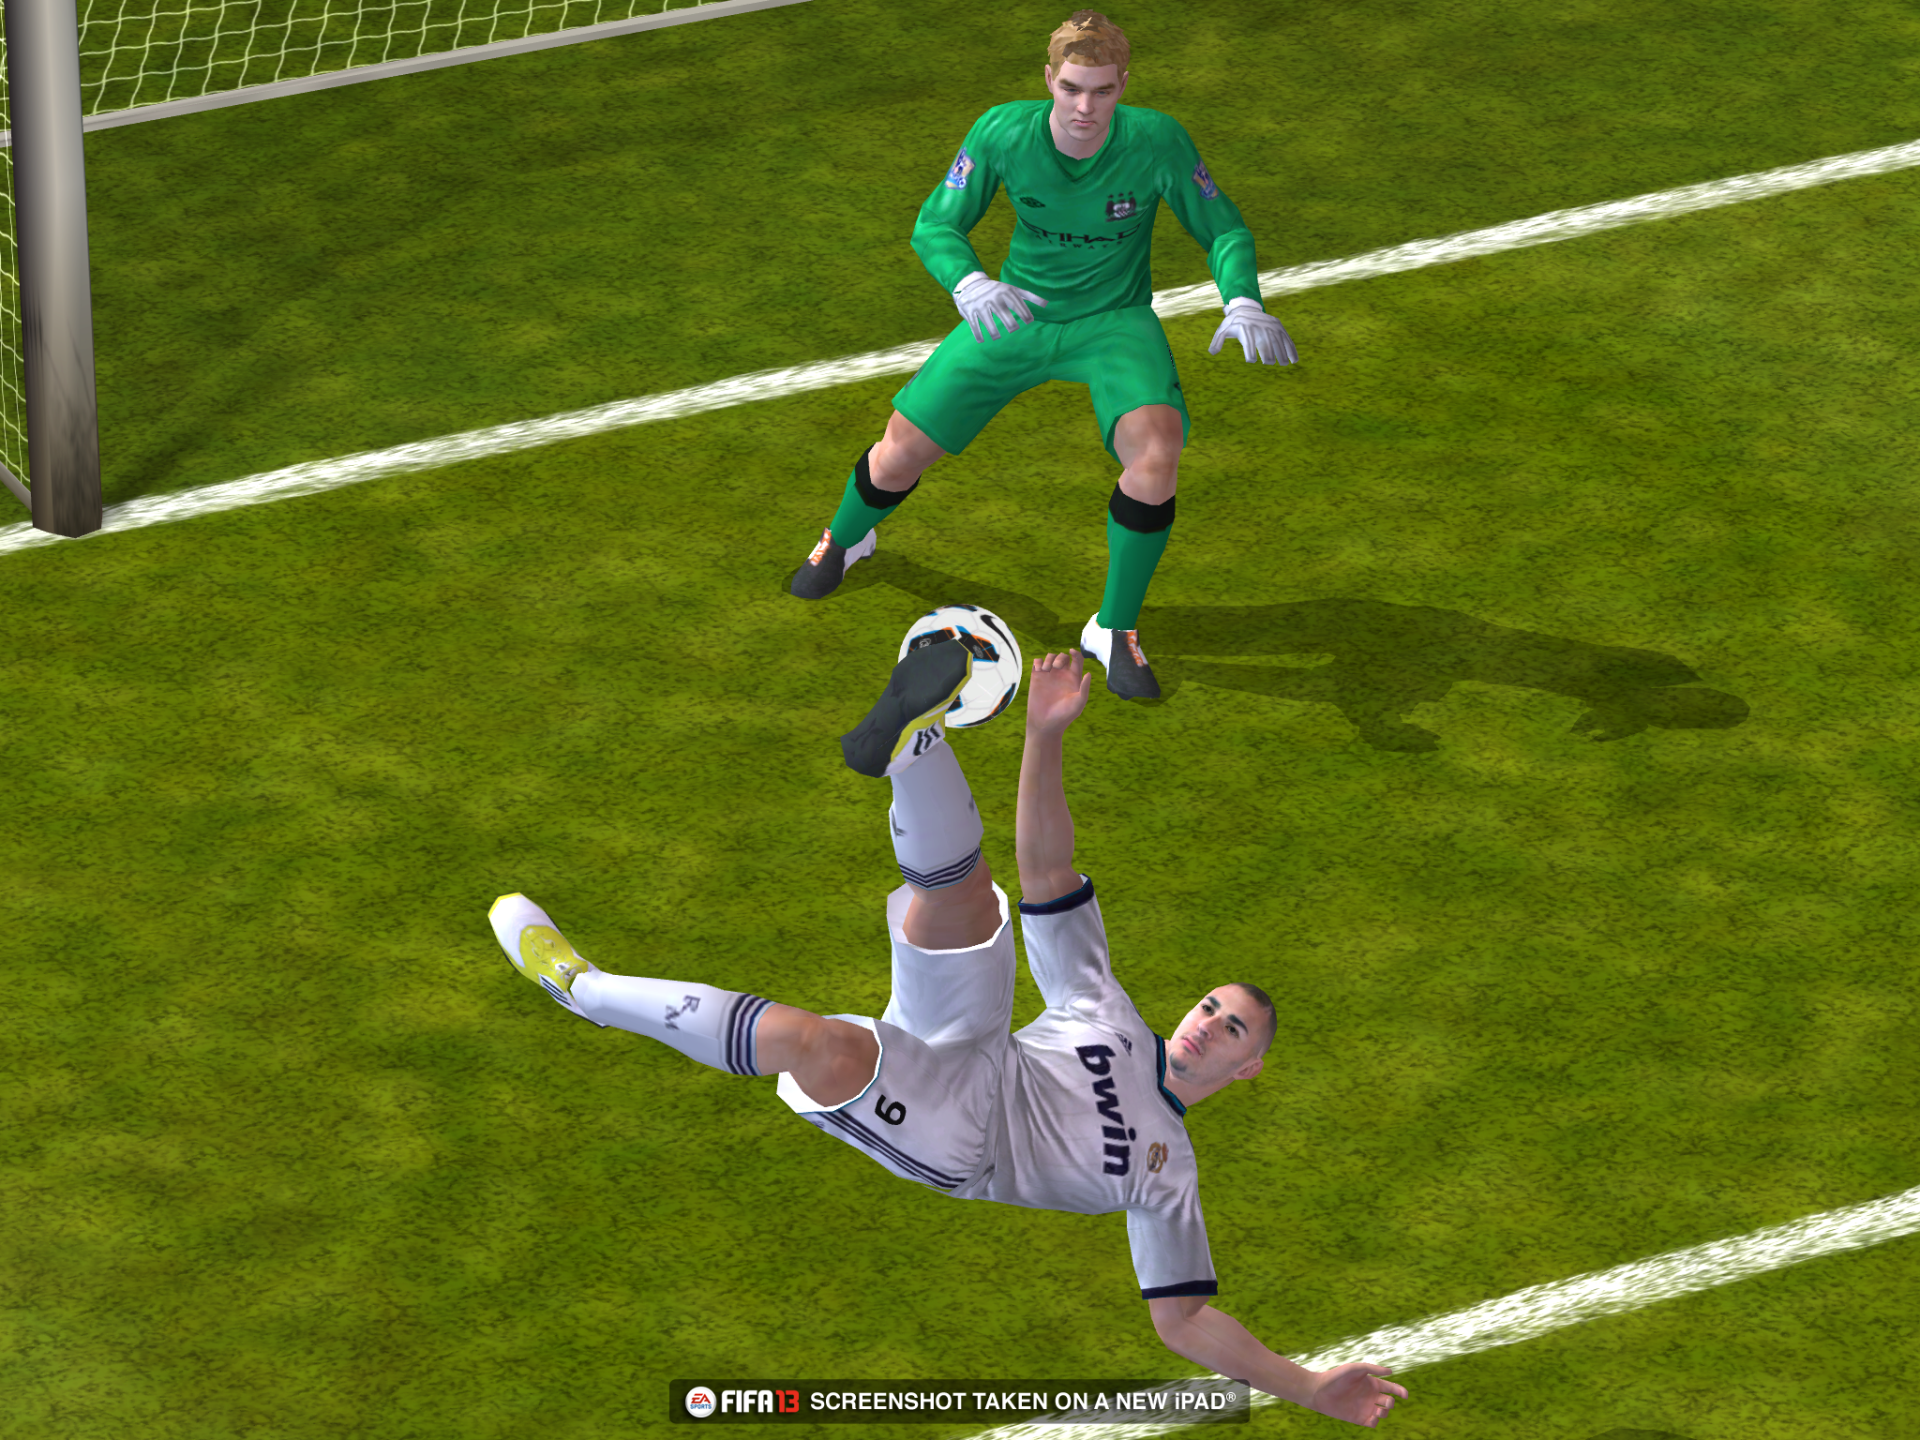 Obrázky z iOS verze FIFA 13 70830